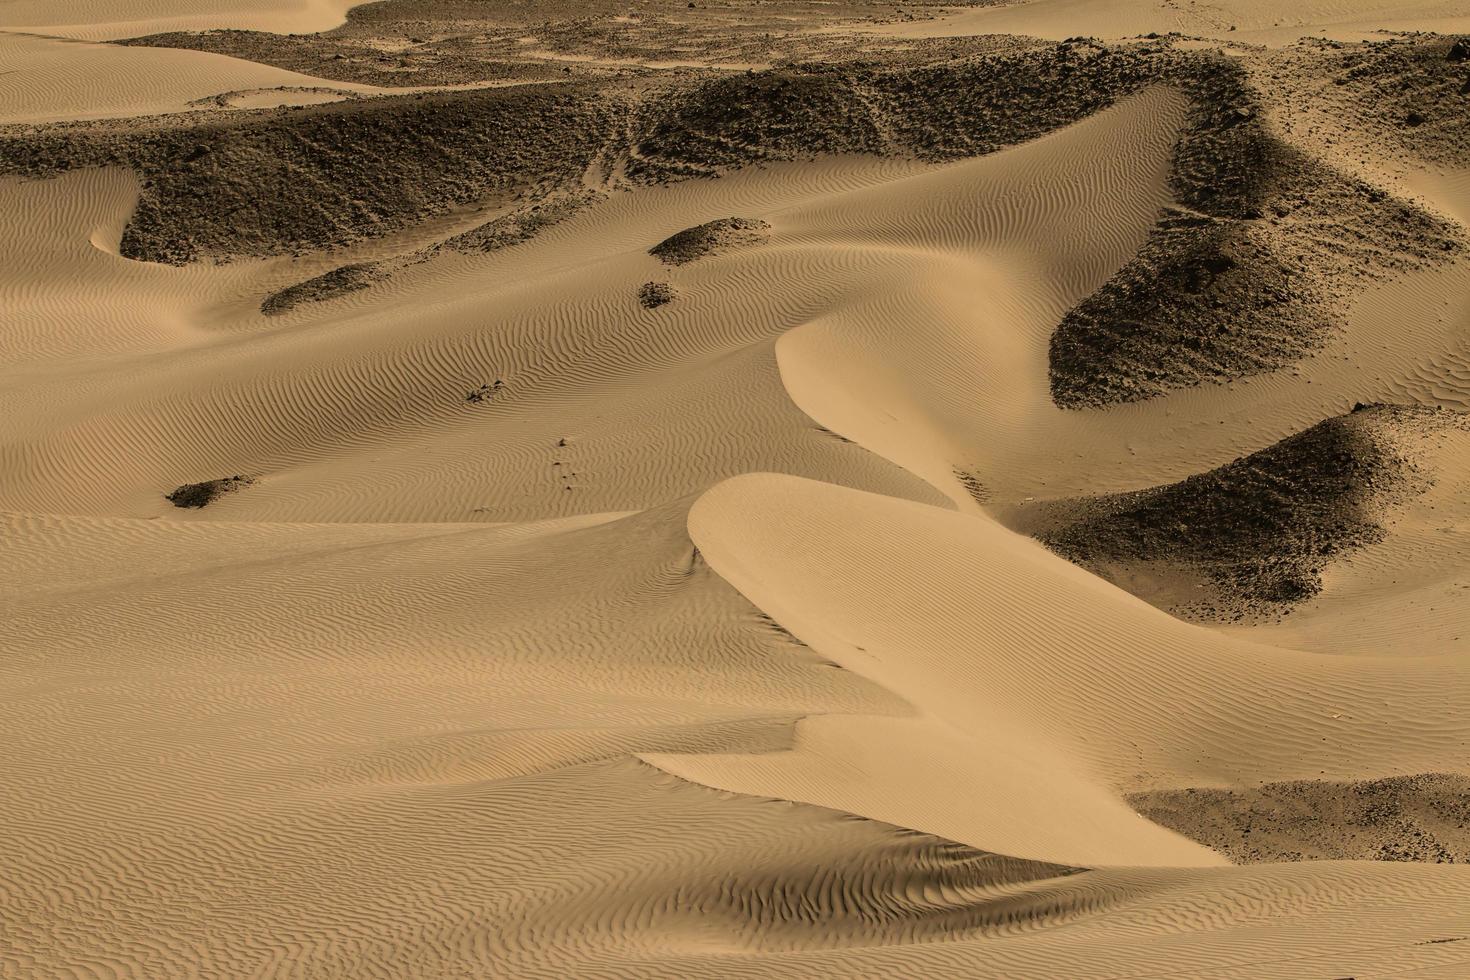 abstrakt detalj av sand i sanddynerna foto